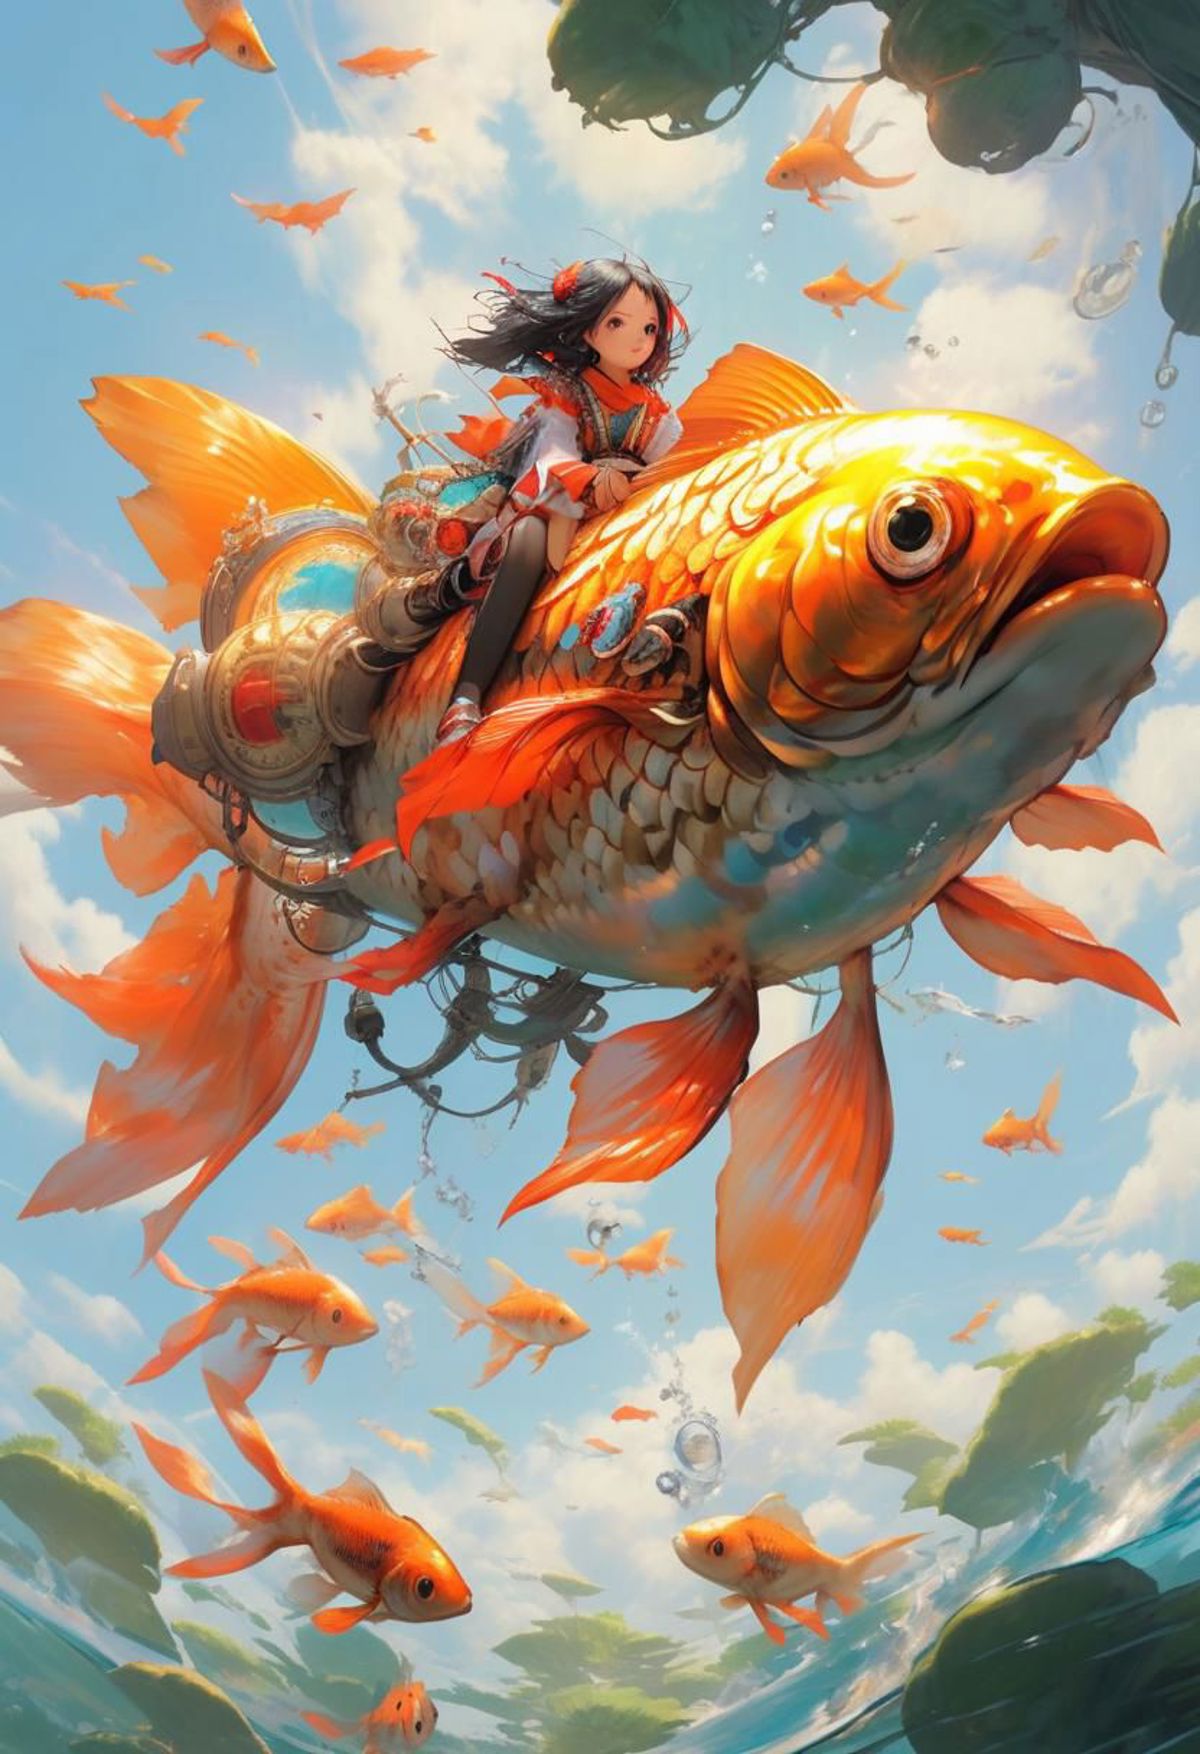 【XL】绪儿-水空两栖大鱼Big fish image by Gametesterbuz